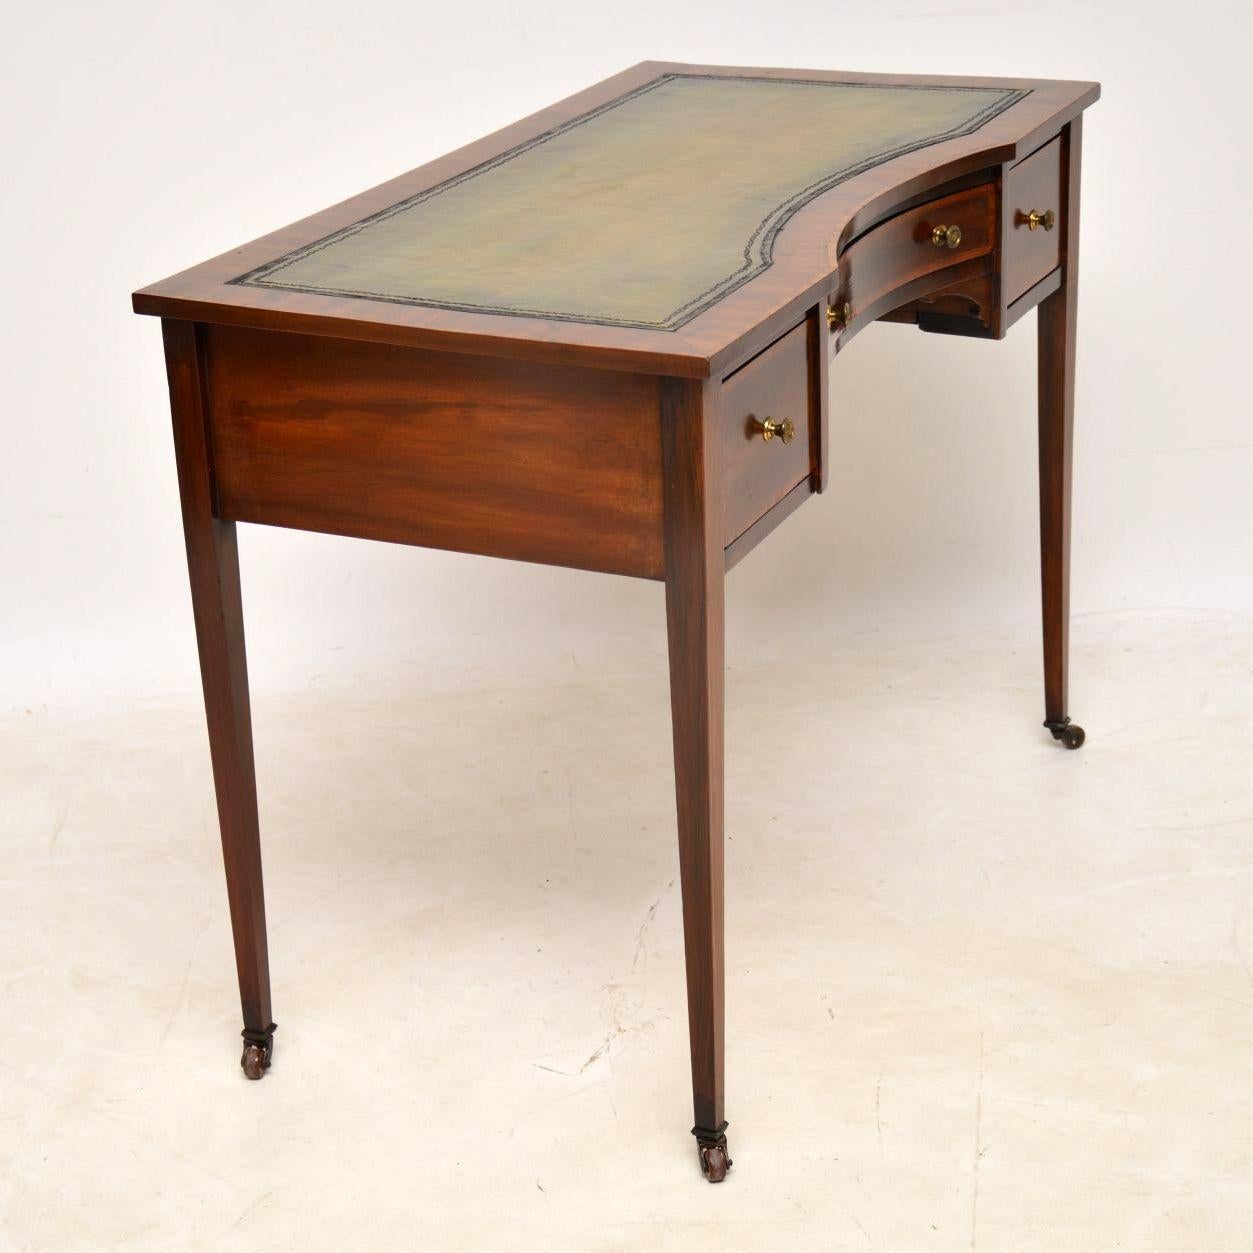 Antique Edwardian Inlaid Mahogany Writing Table or Desk 1